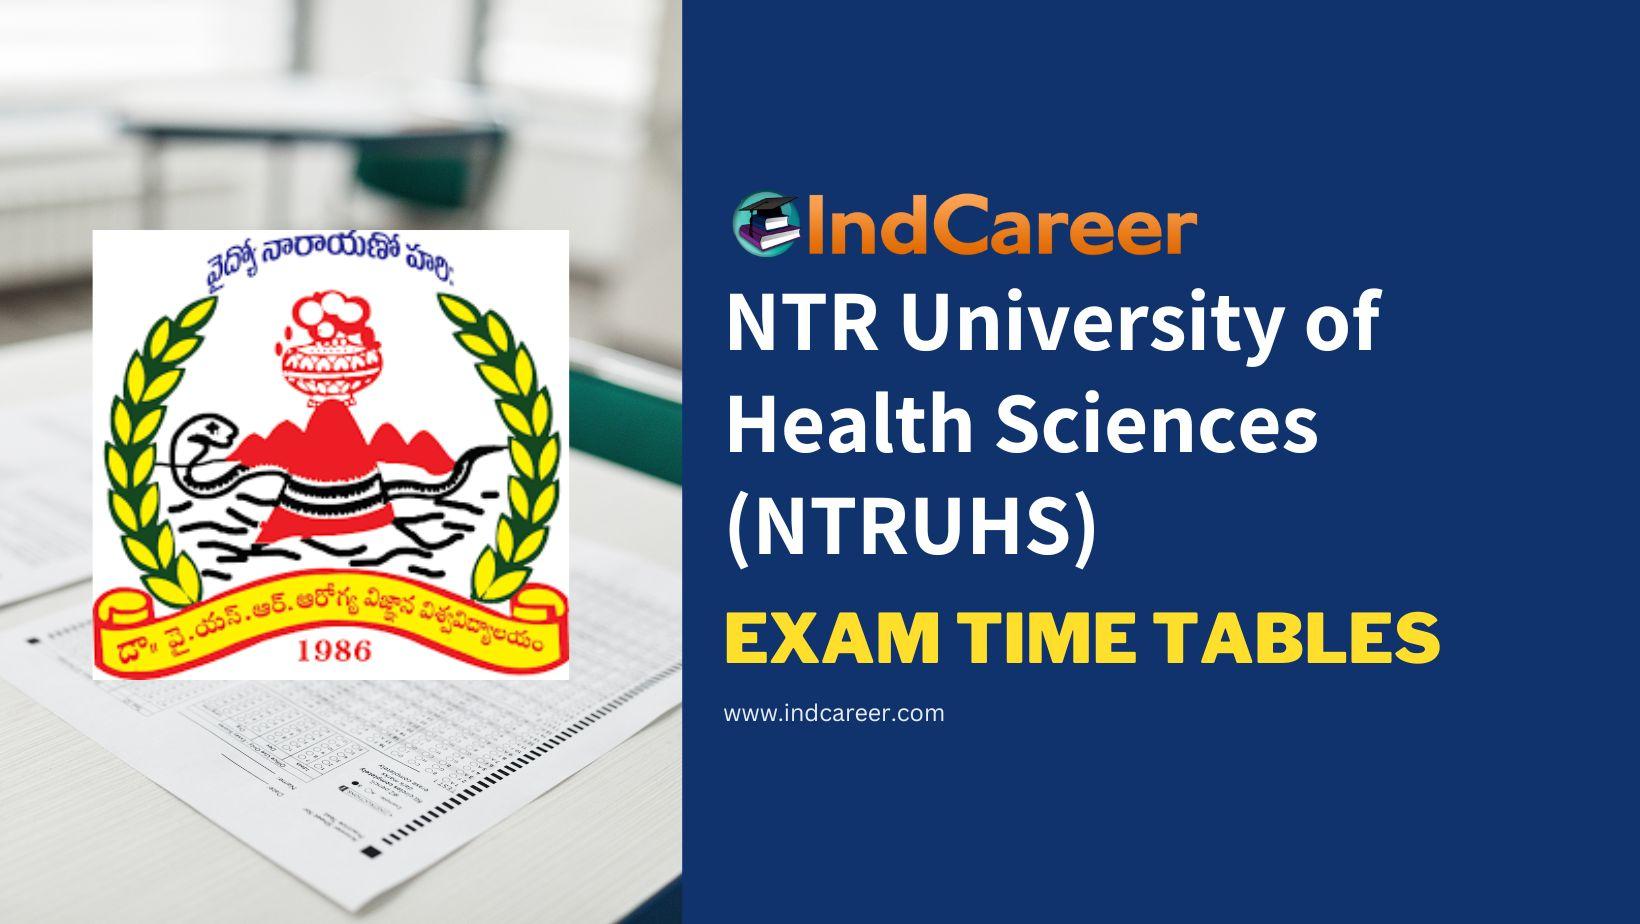 NTR University of Health Sciences (NTRUHS) Exam Time Tables - IndCareer